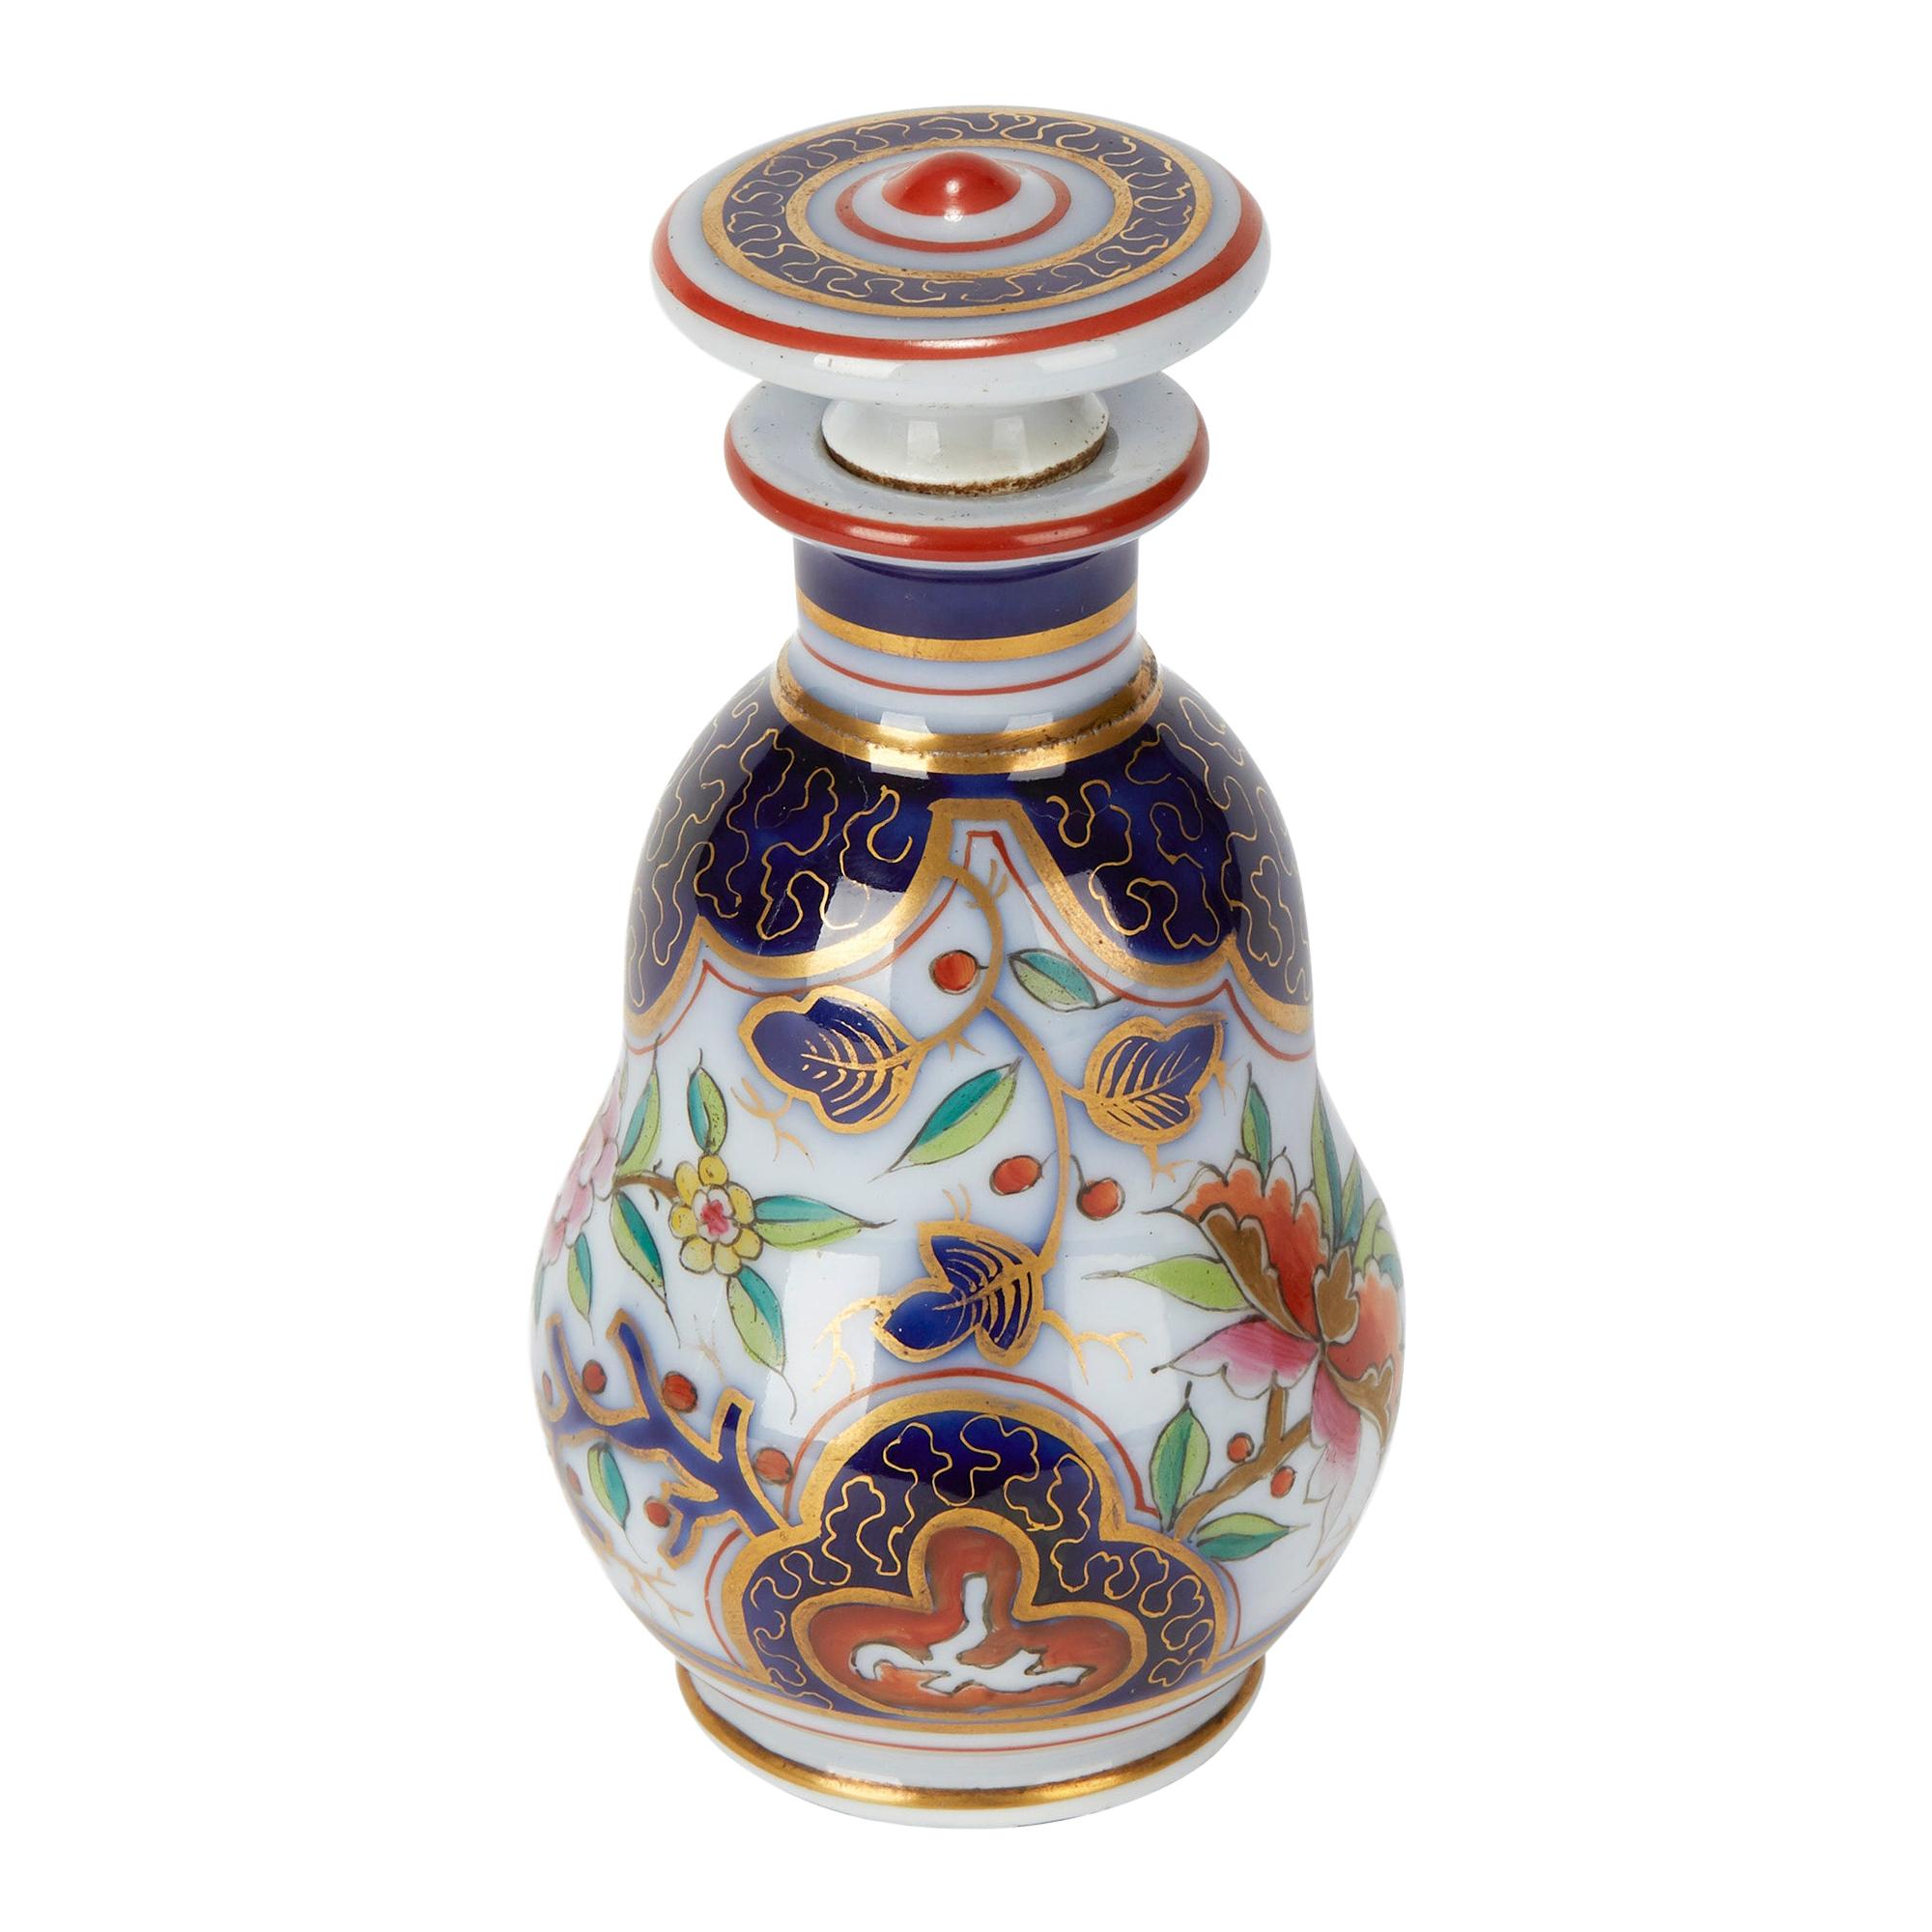 French Antique Porcelain Imari Design Scent Bottle, 19th Century